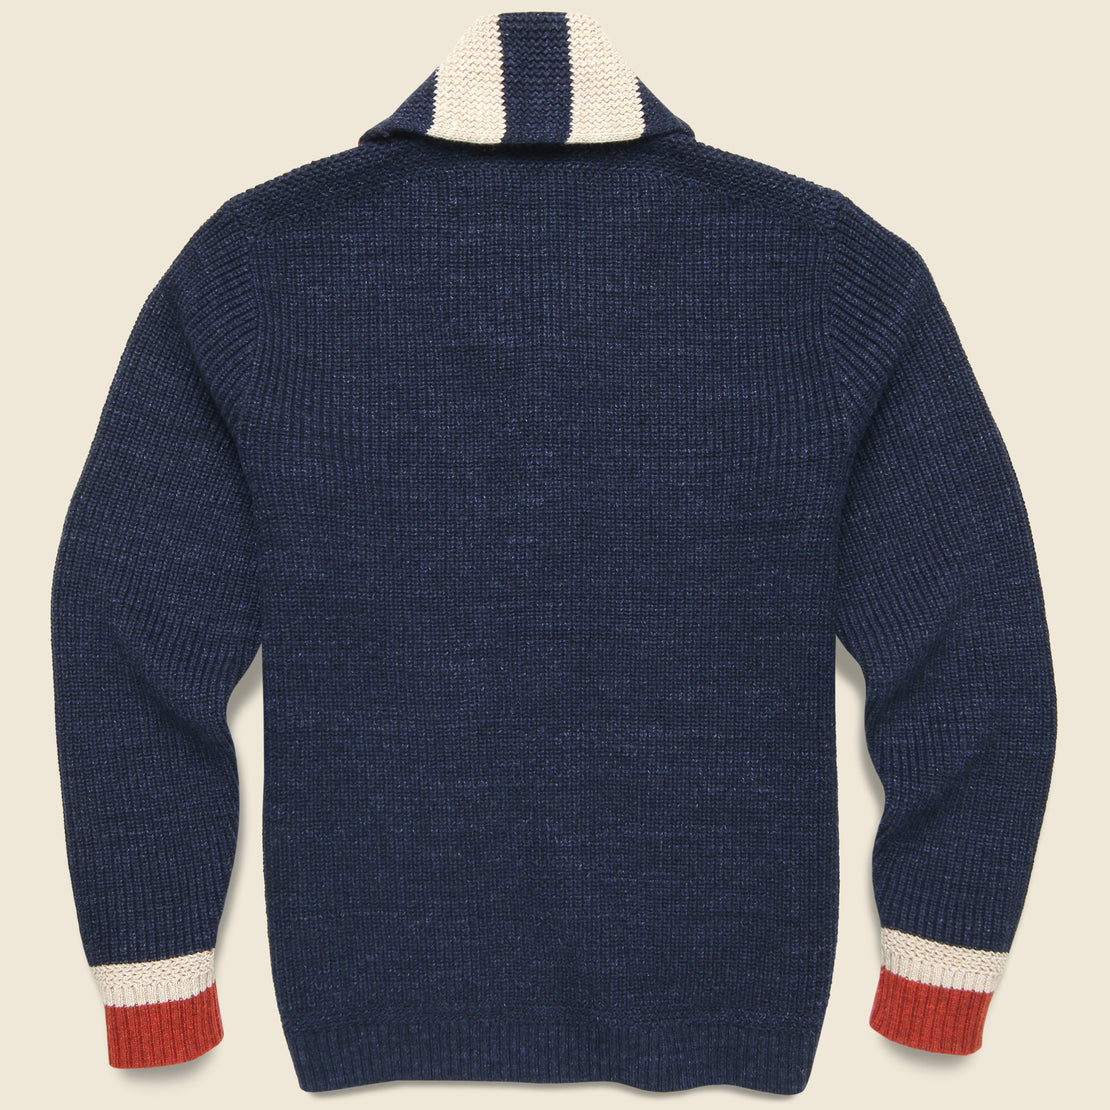 Car Club Shawl Cardigan - Dark Indigo/Red/Cream - RRL - STAG Provisions - Tops - Sweater